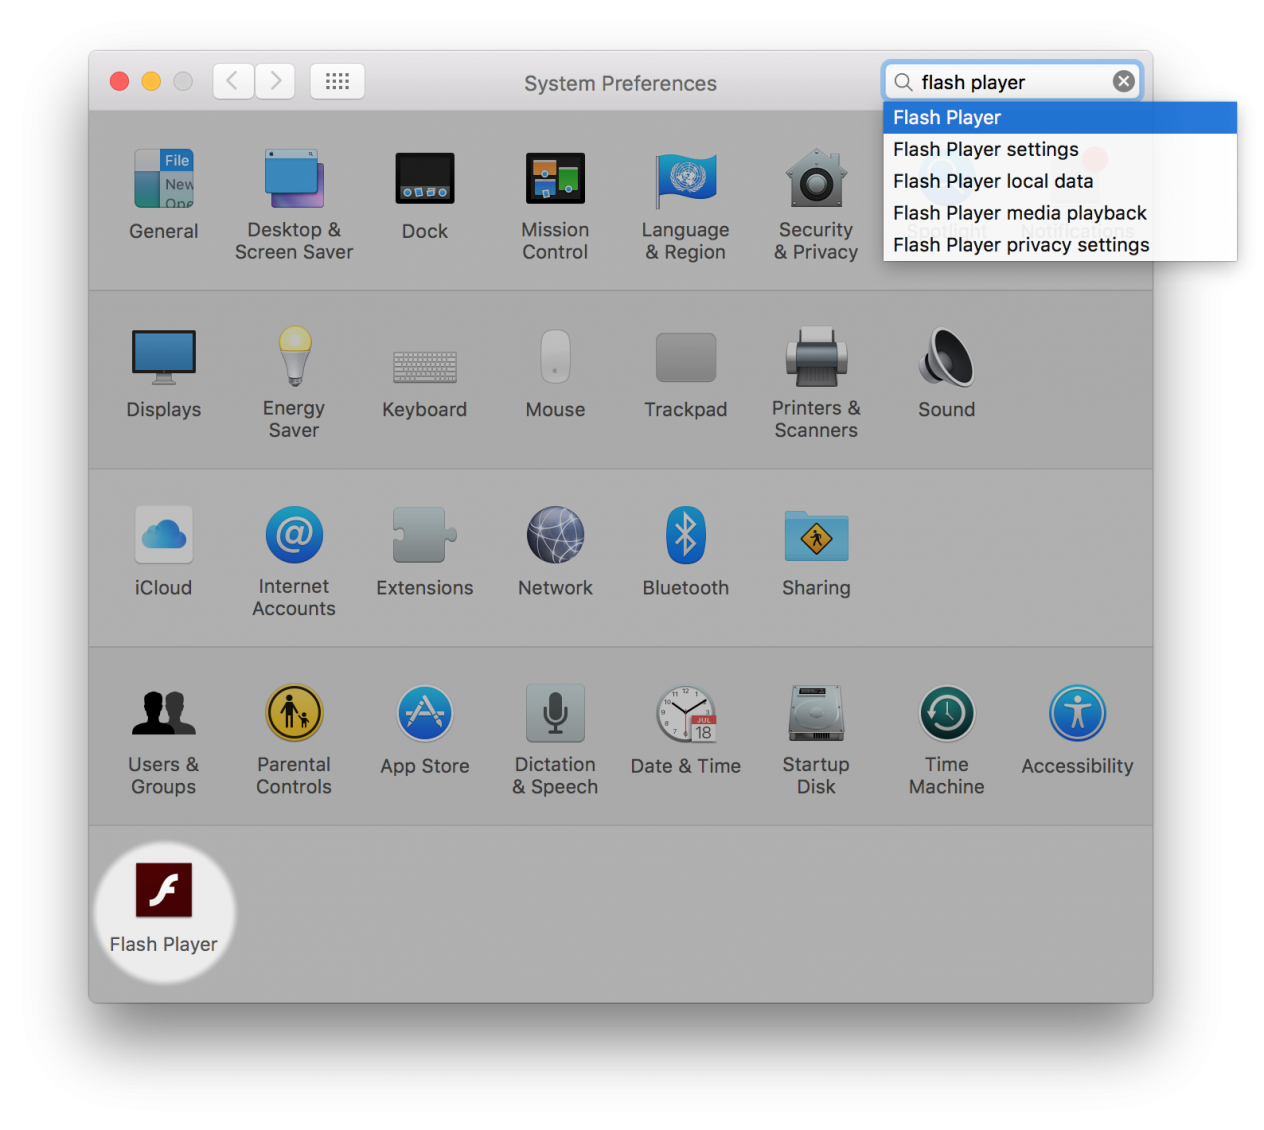 updating adobe flash on mac